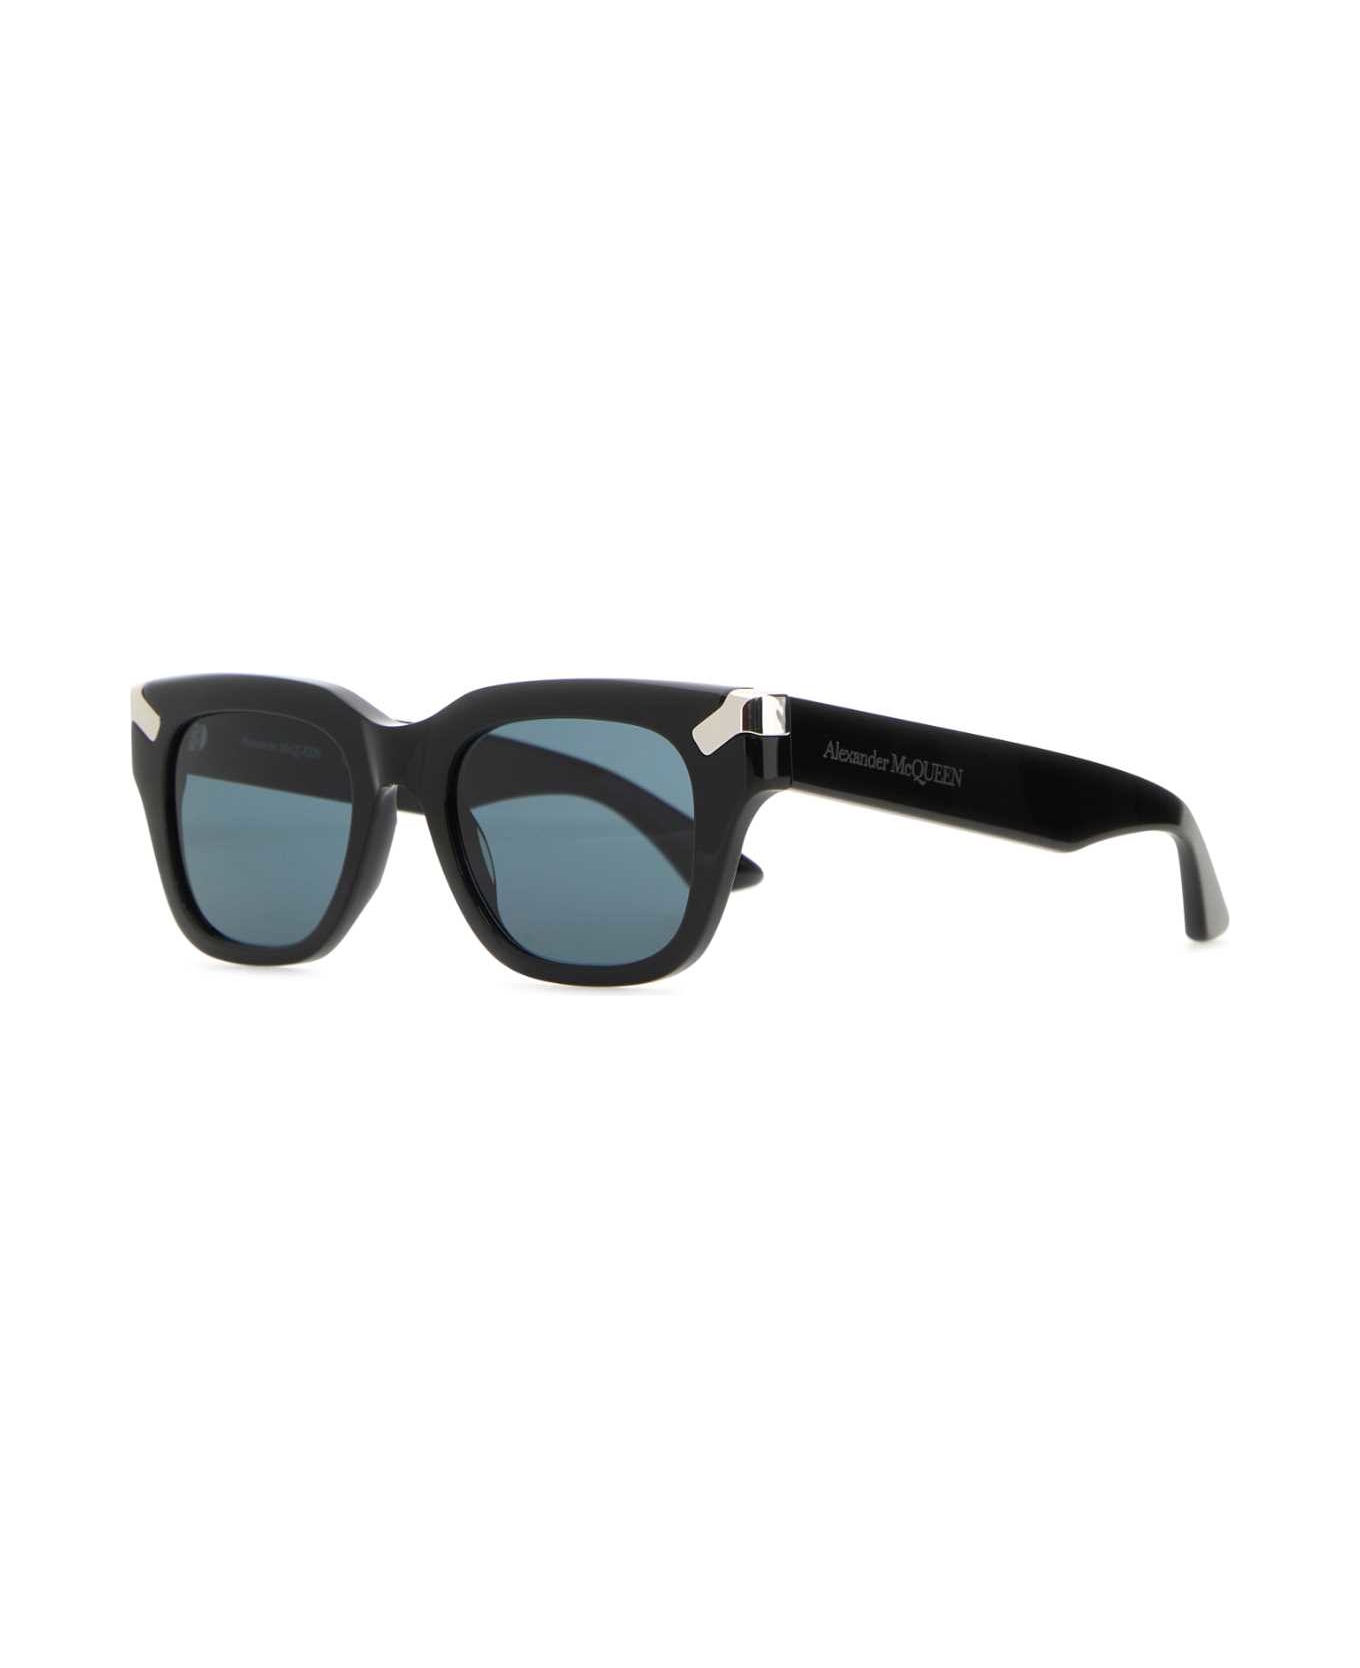 Alexander McQueen Black Acetate Punk Rivet Sunglasses - SOLIDBLUE